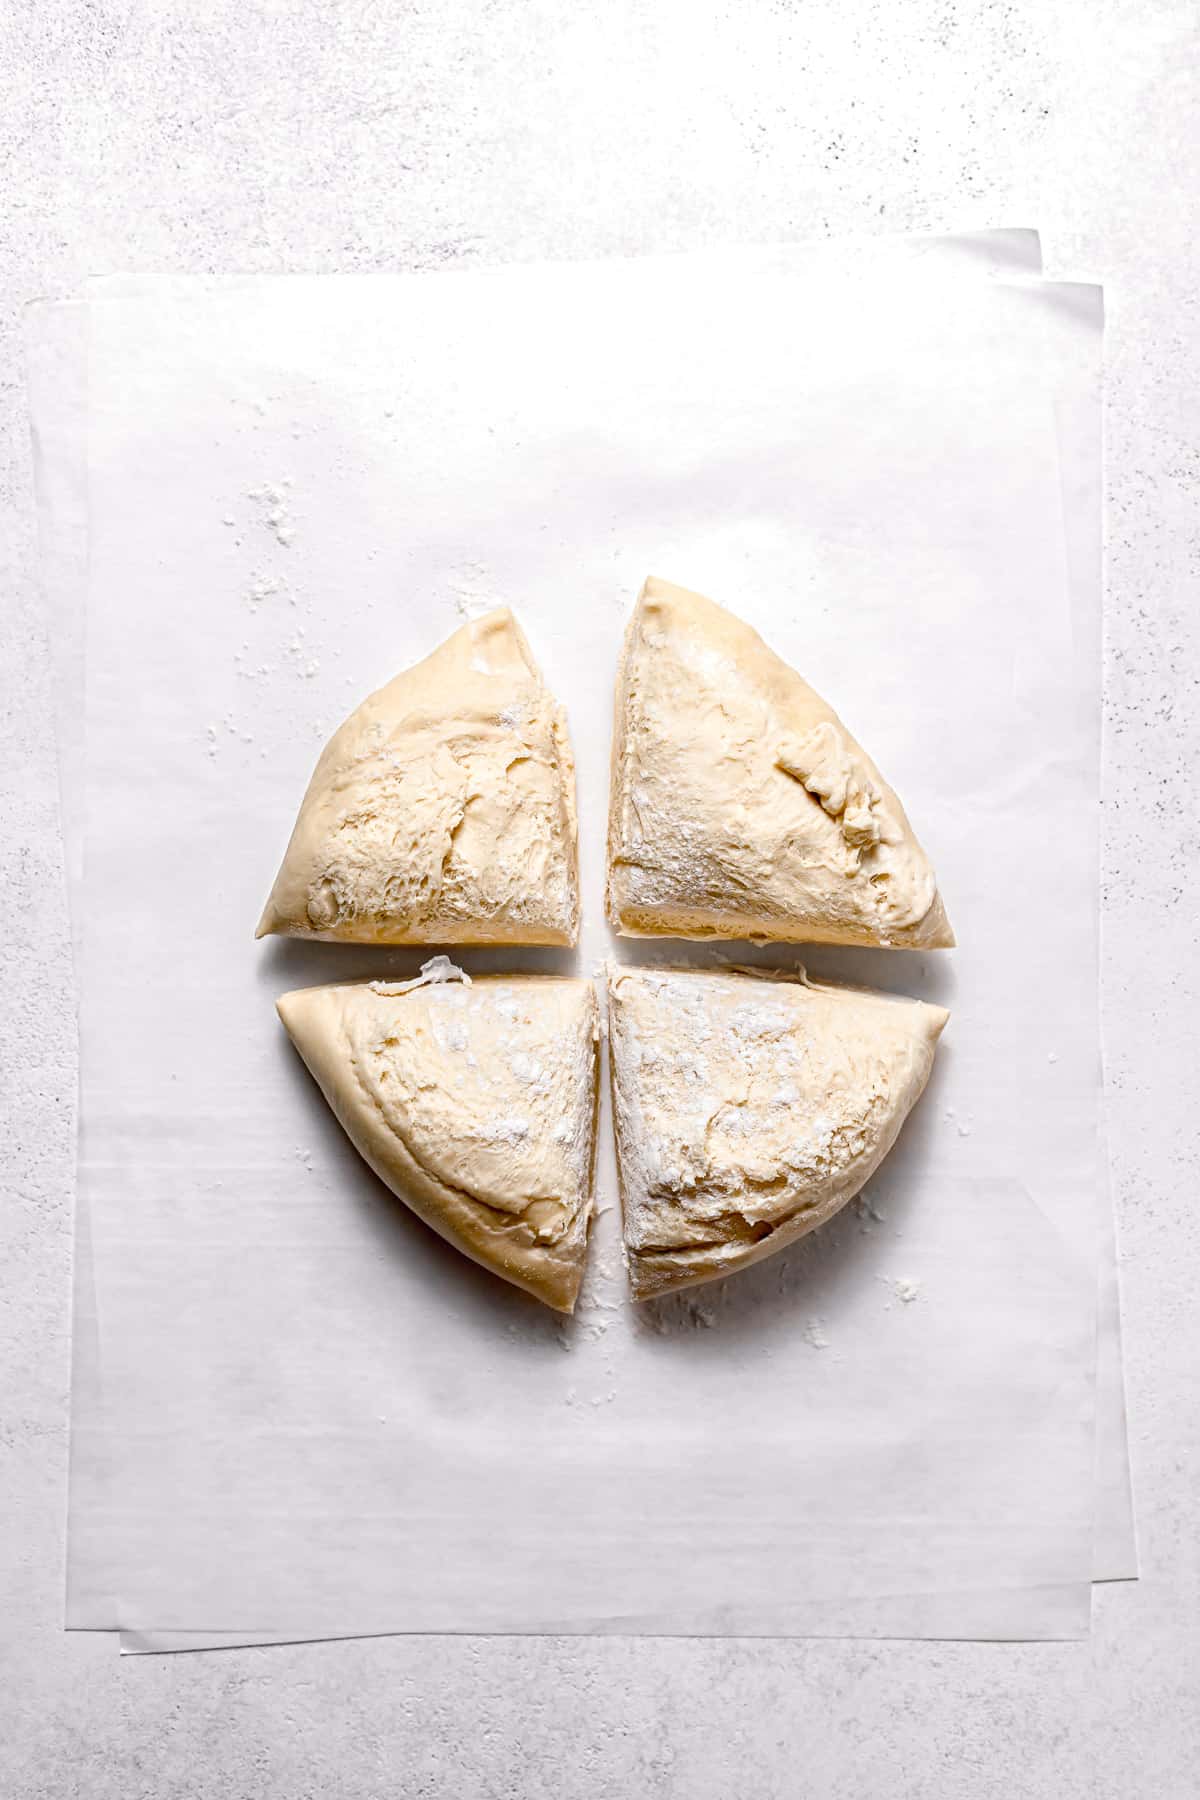 dough cut into four pieces.